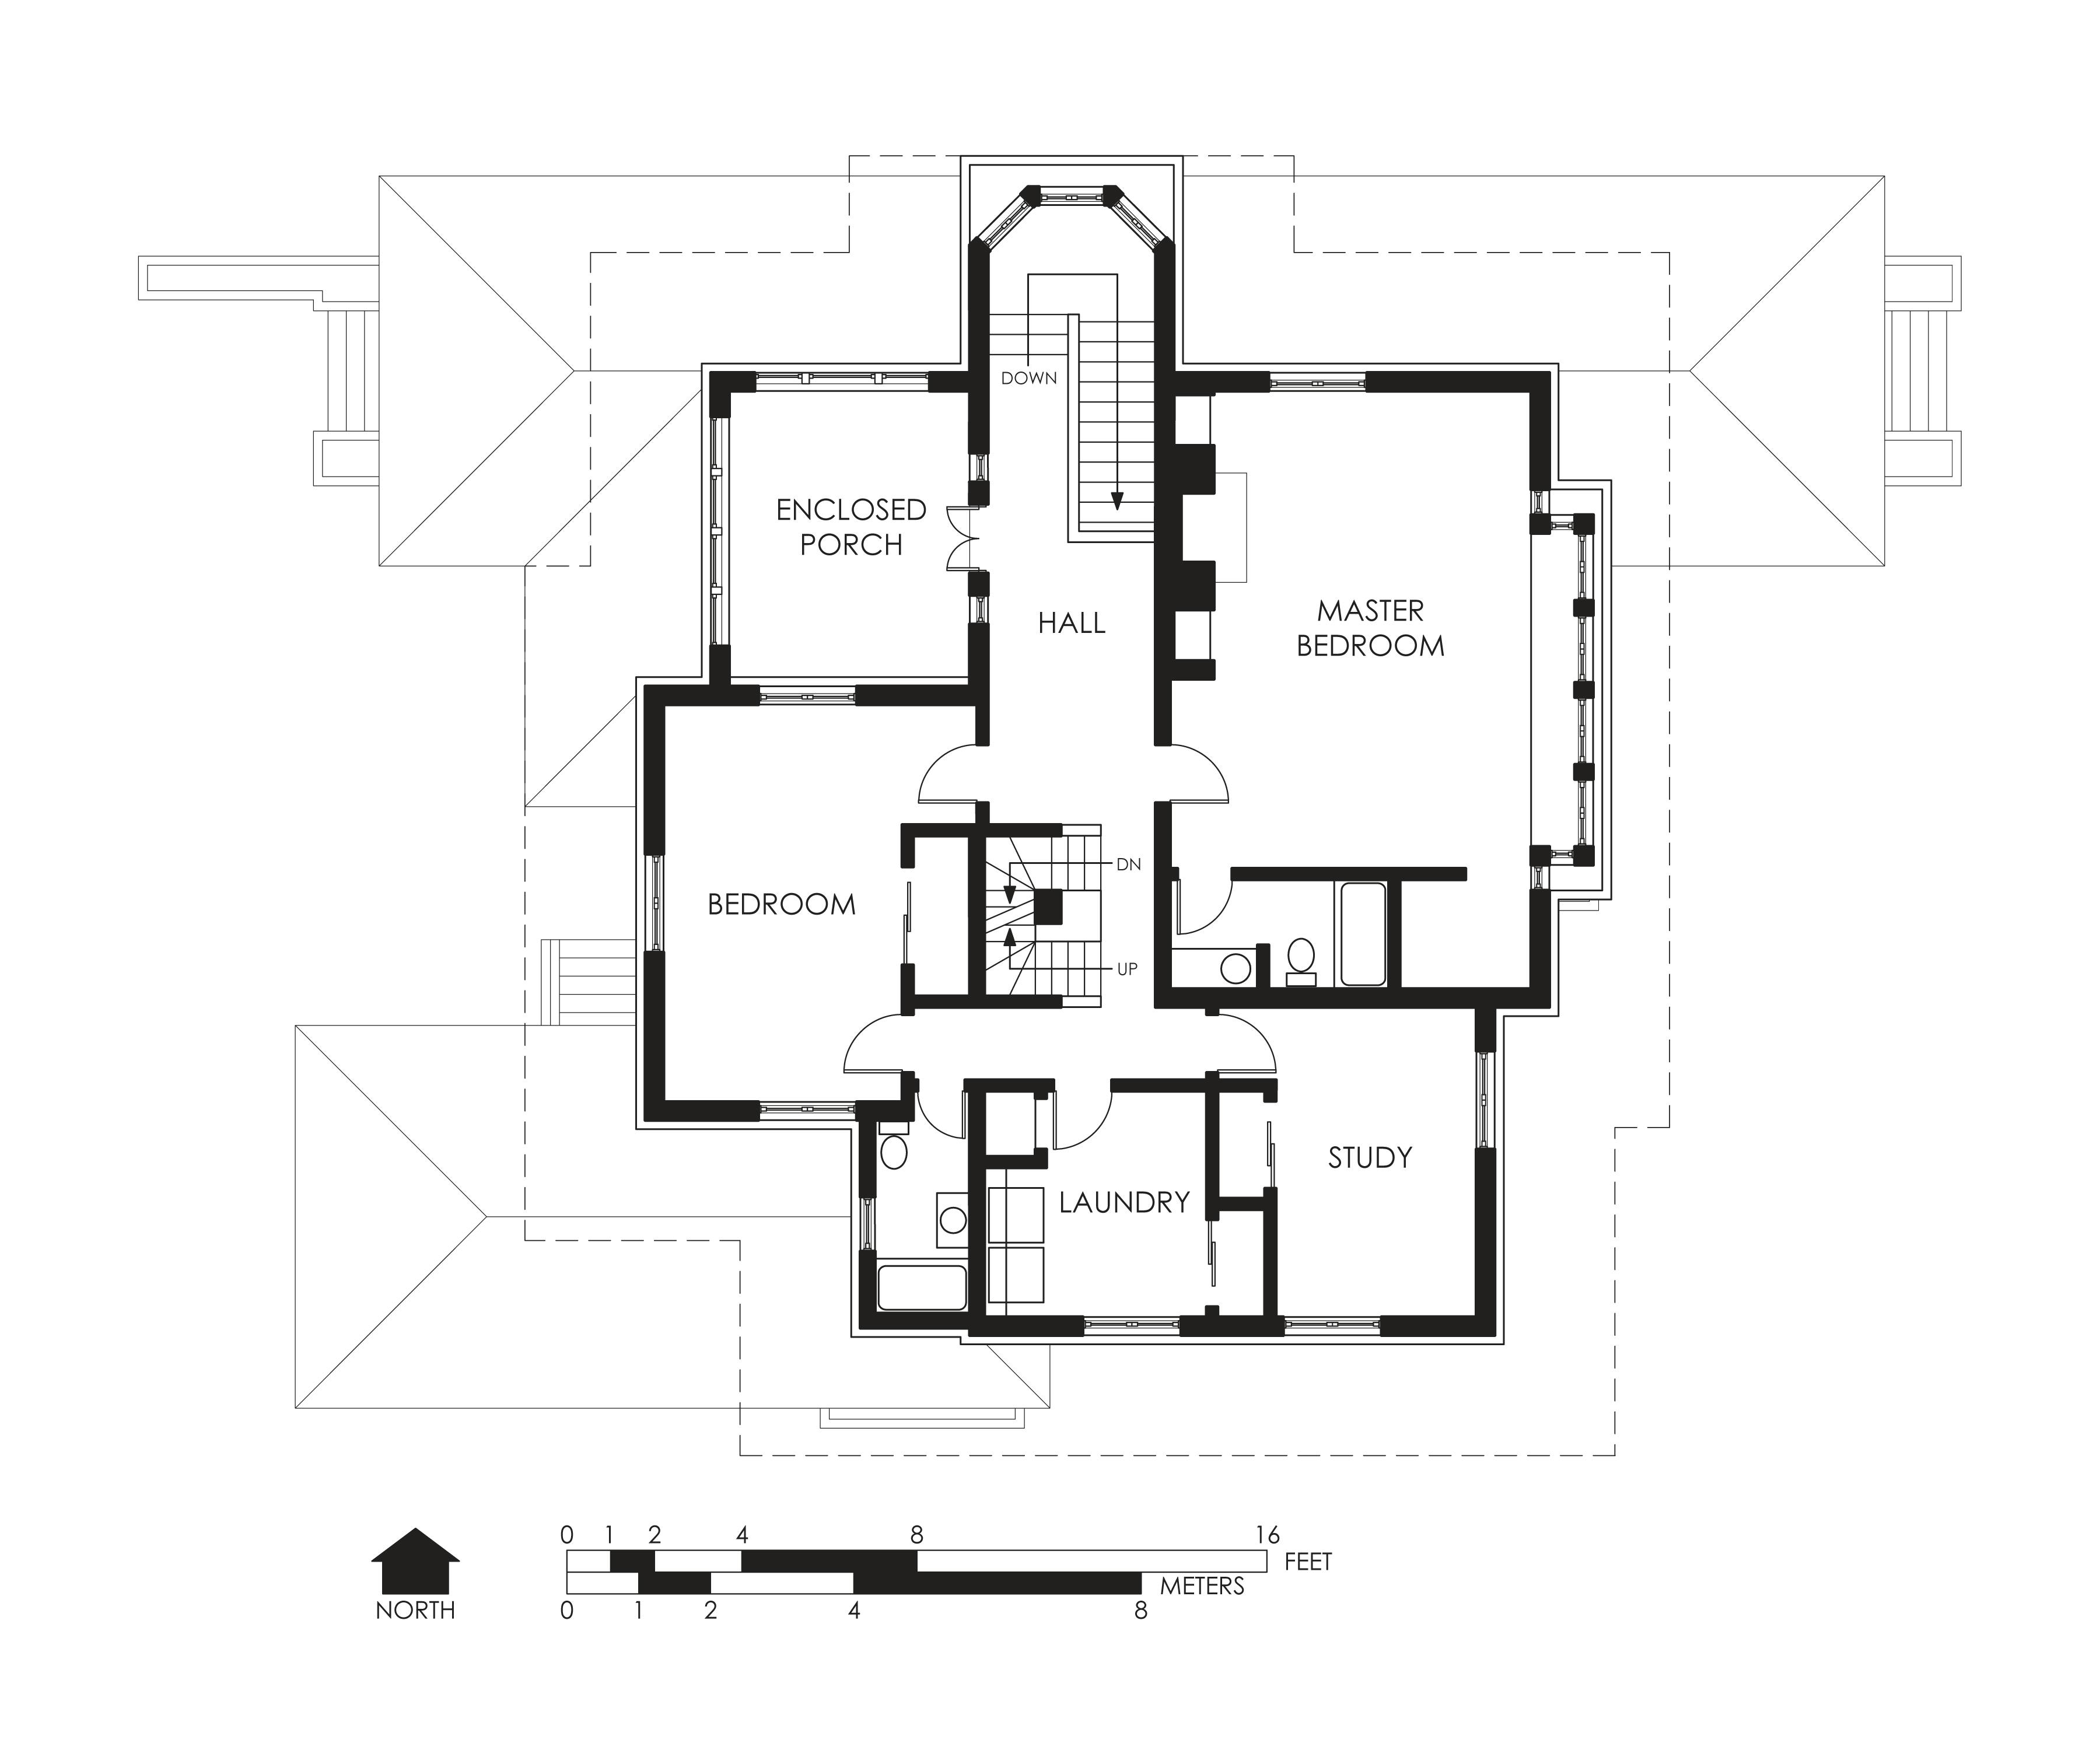 floorplan illustration of a house